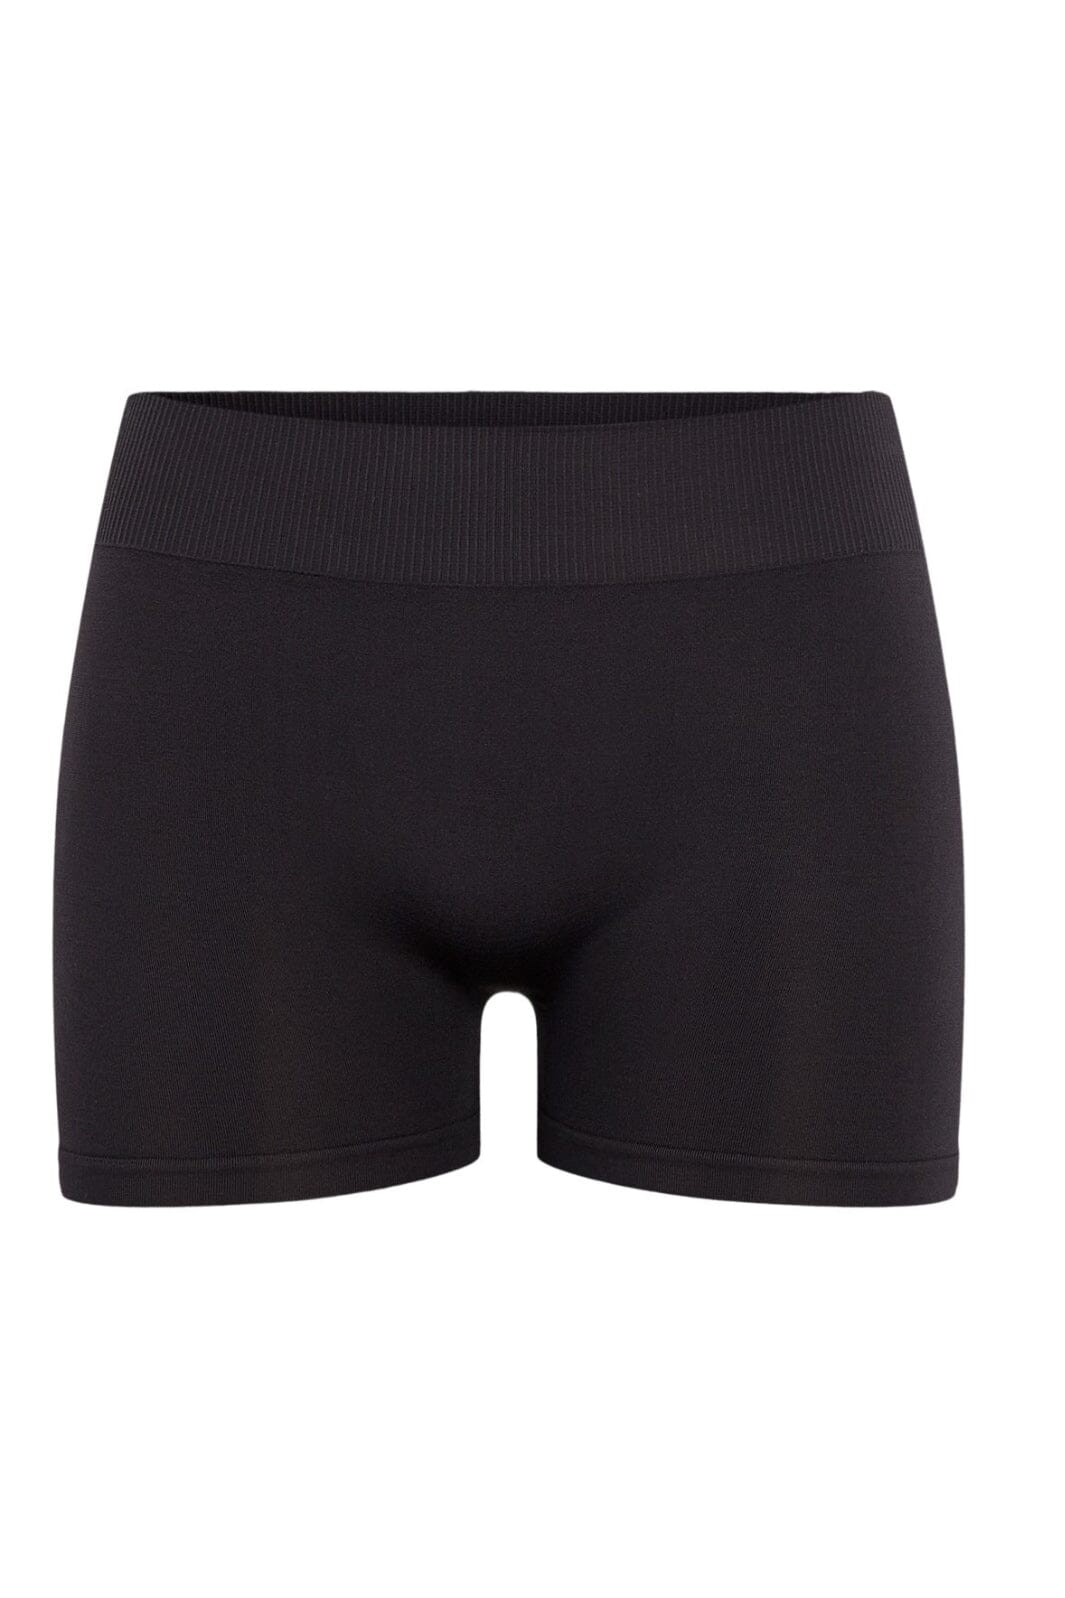 Pieces - London Mini Shorts - Black Shorts 